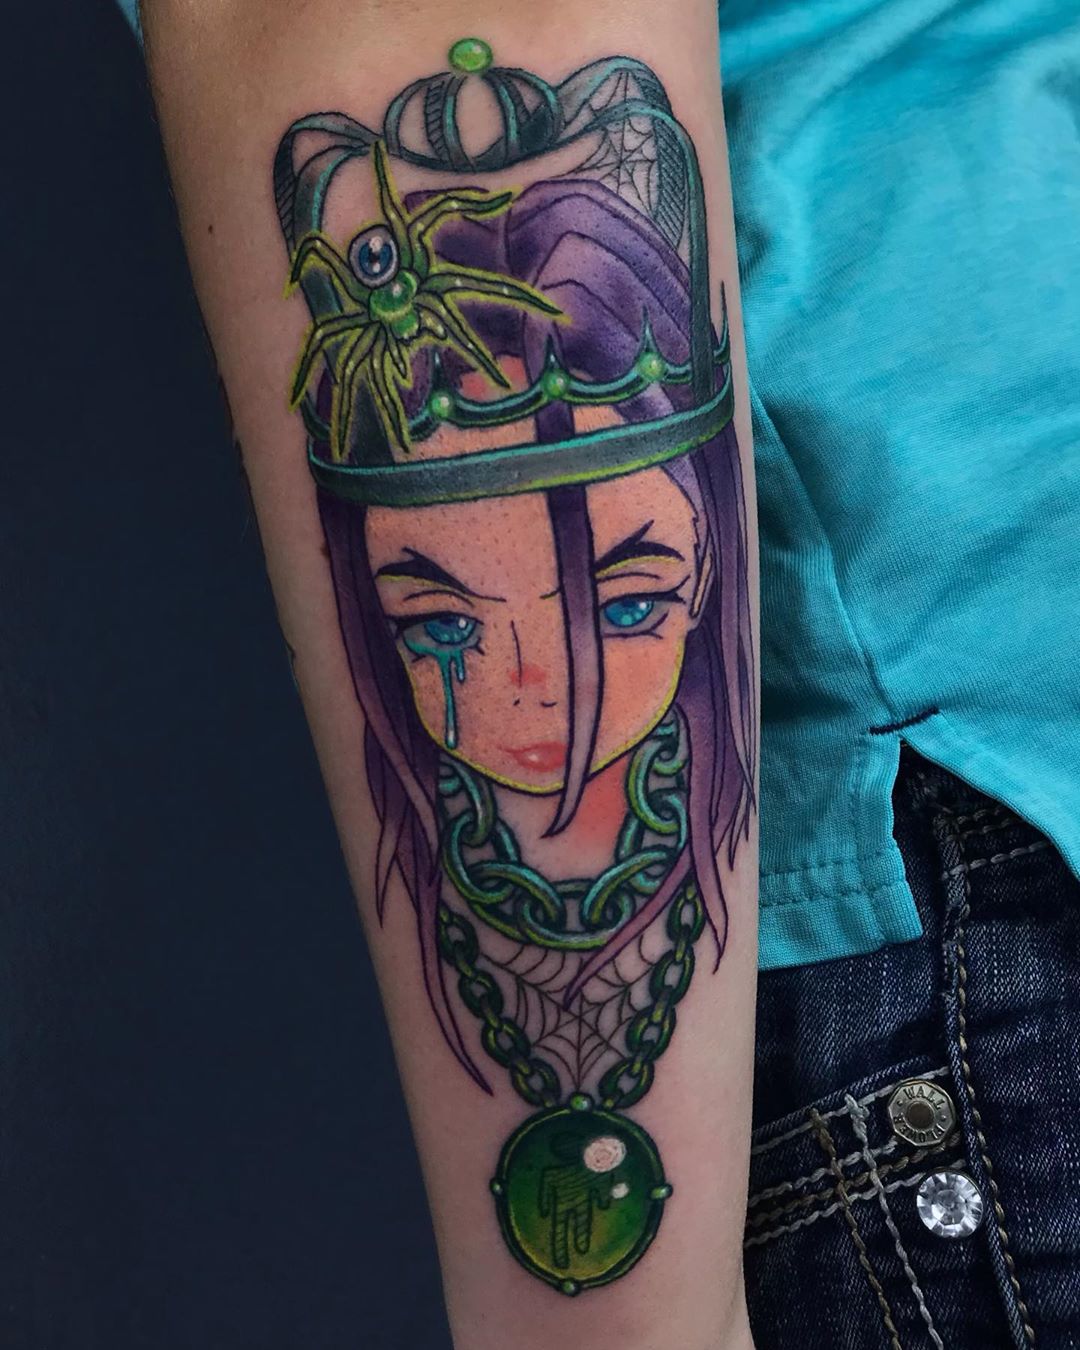 Billie Eilish portrait tattoo on Arm (upper) - Illustrative style by Kaitlin Butler